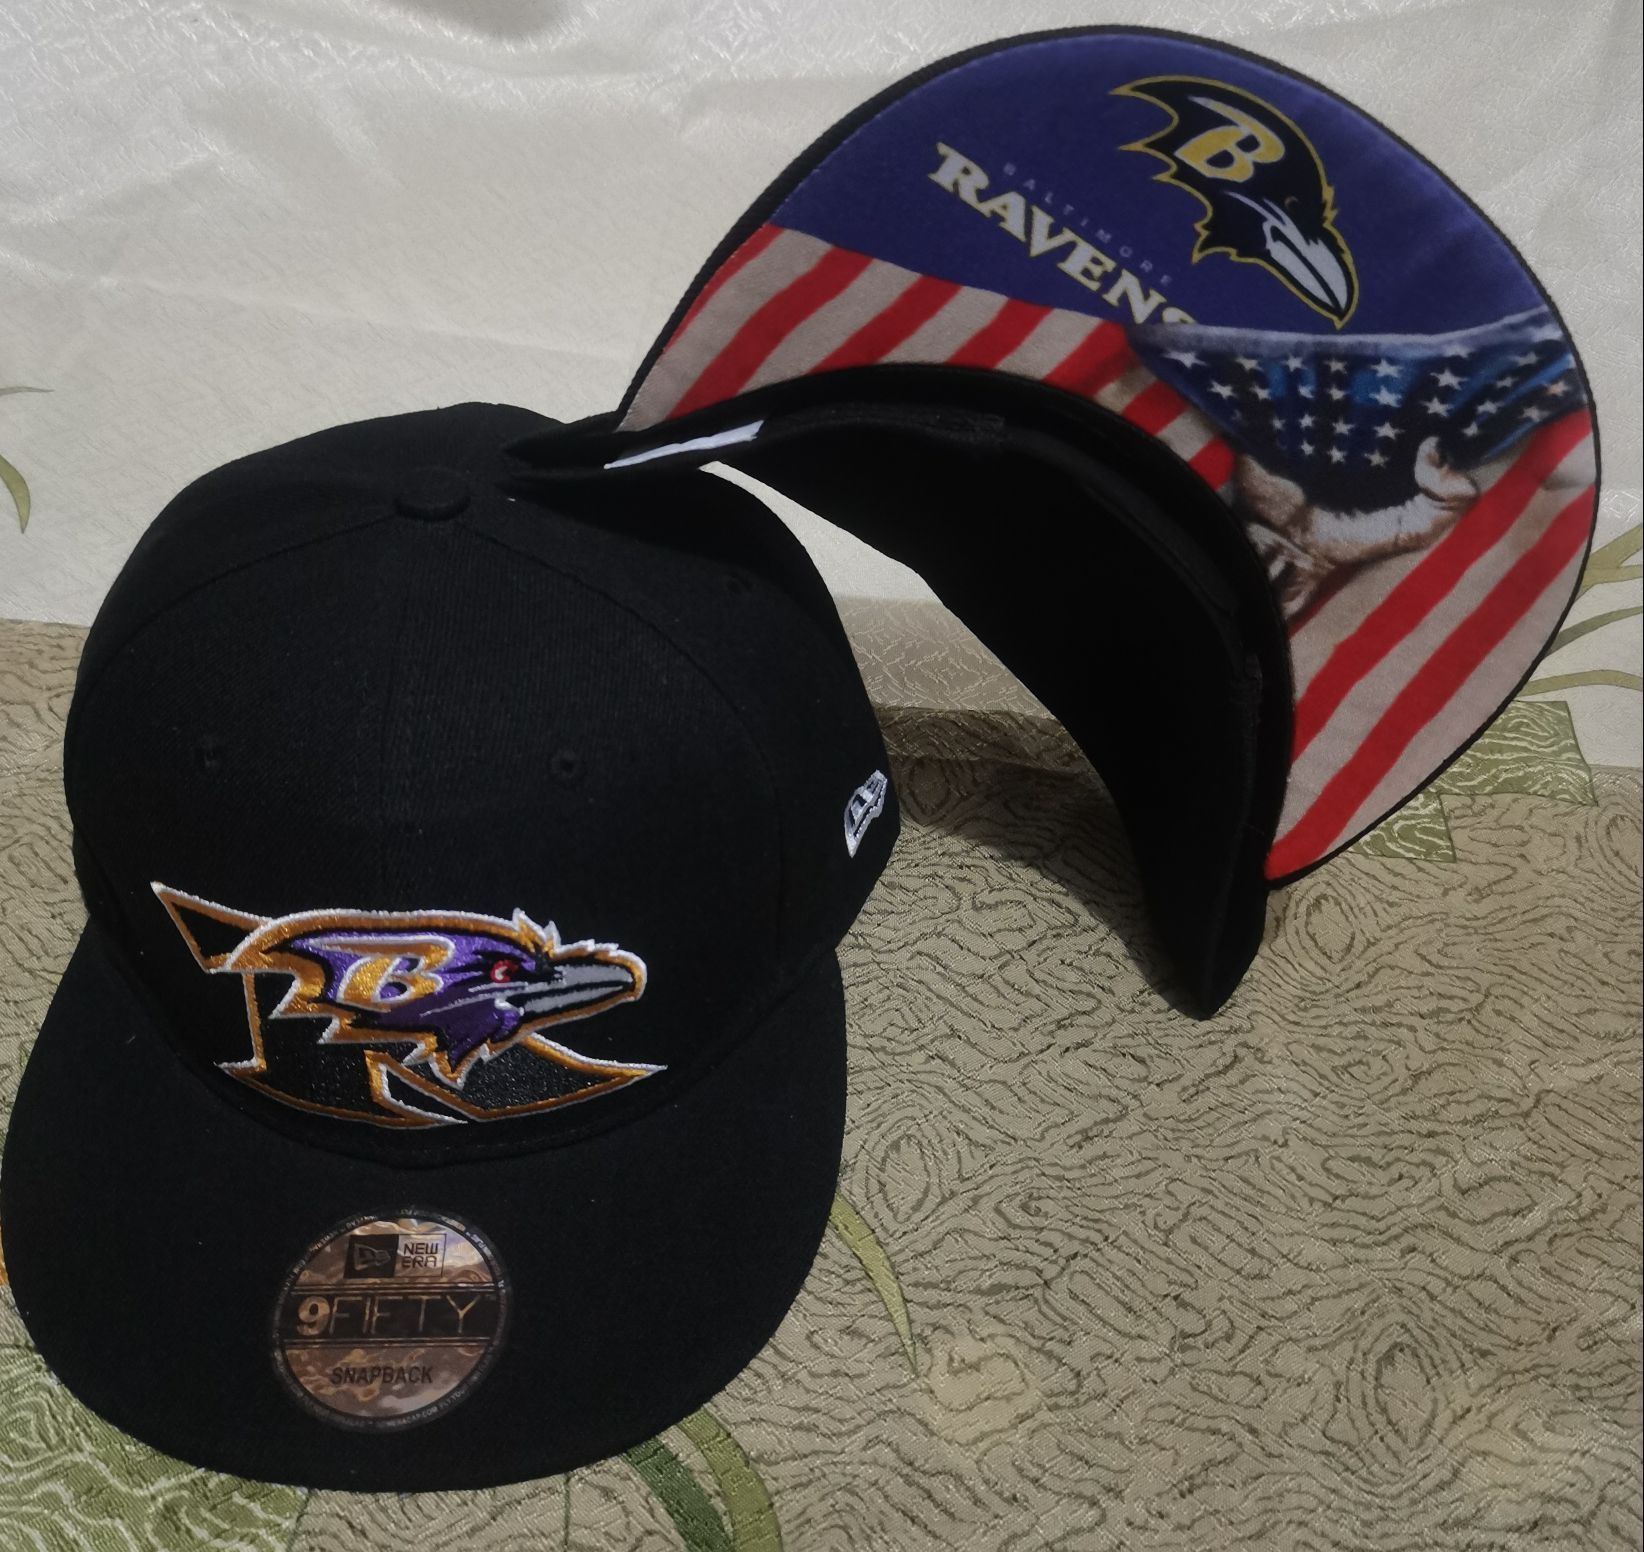 2021 NFL Baltimore Ravens #3 hat